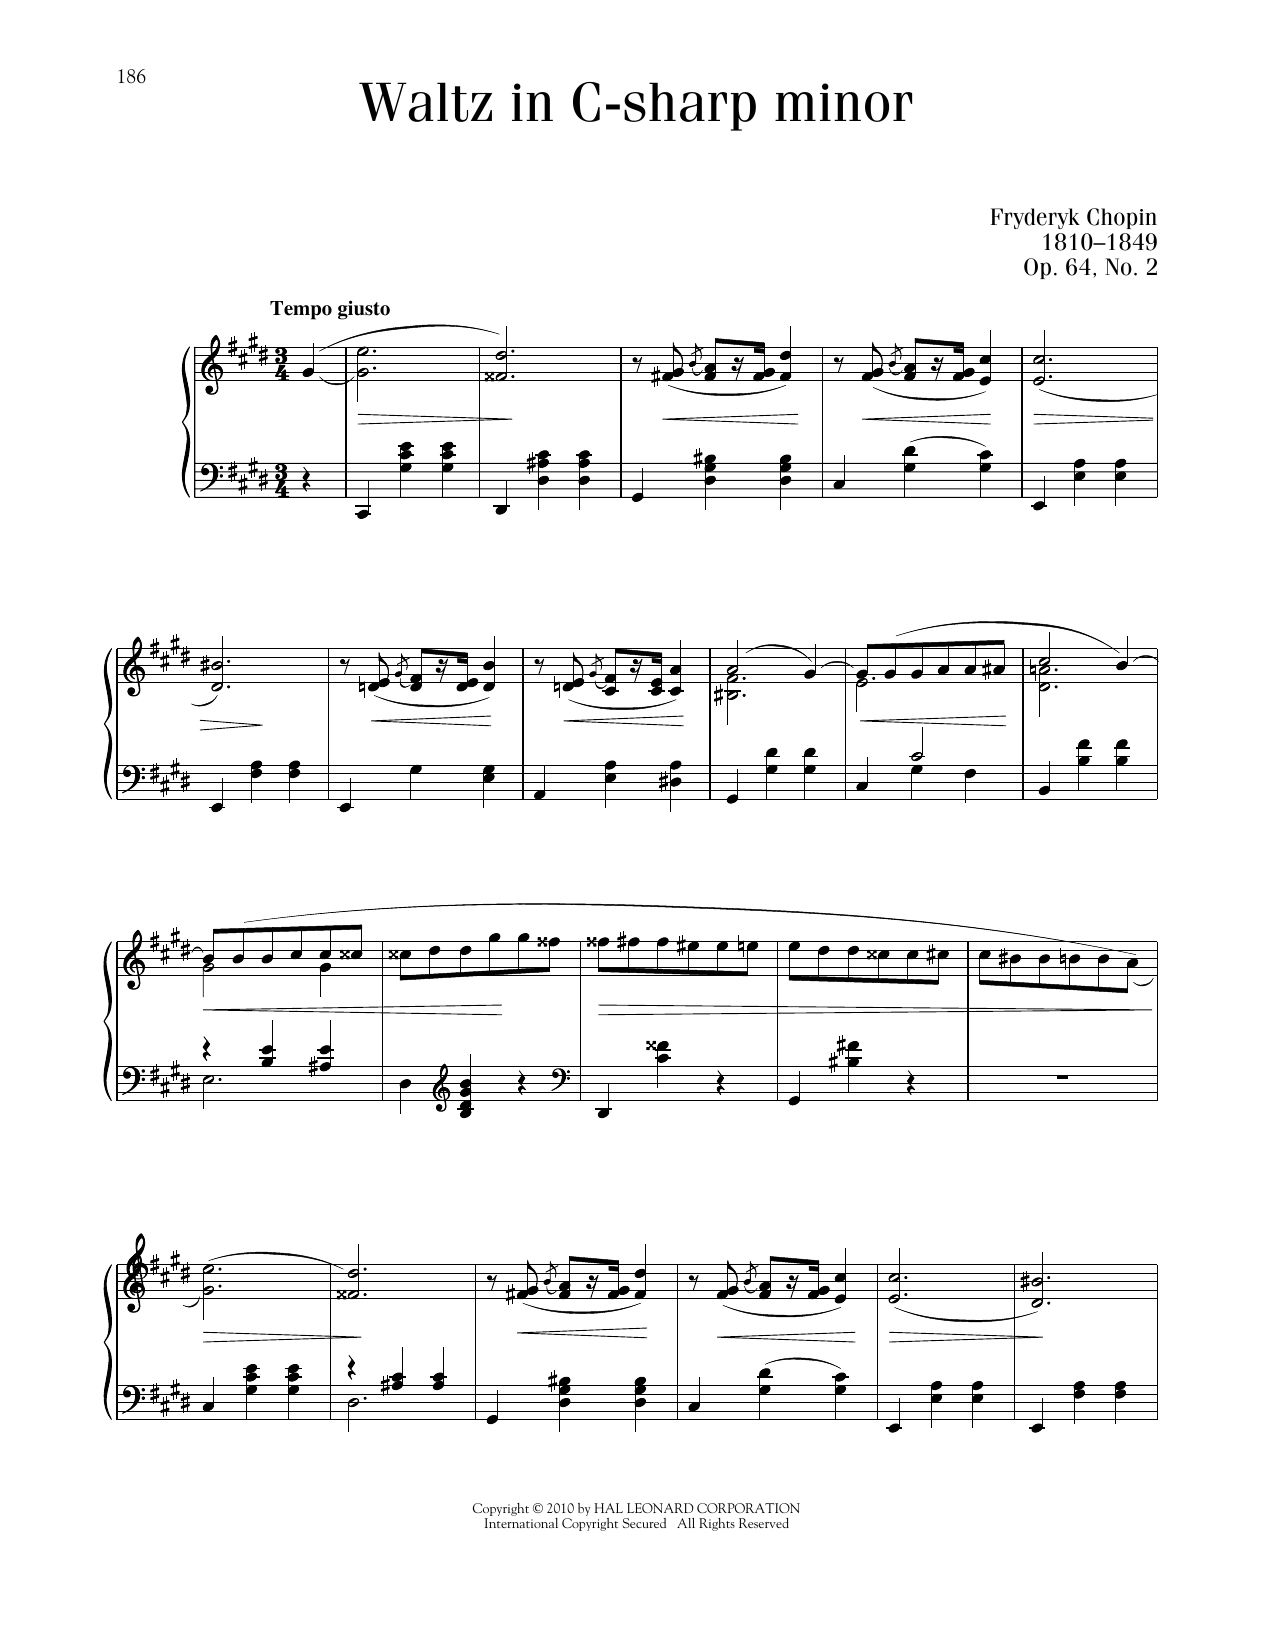 Frederic Chopin Waltz In C-Sharp Minor, Op. 64, No. 2 sheet music notes printable PDF score